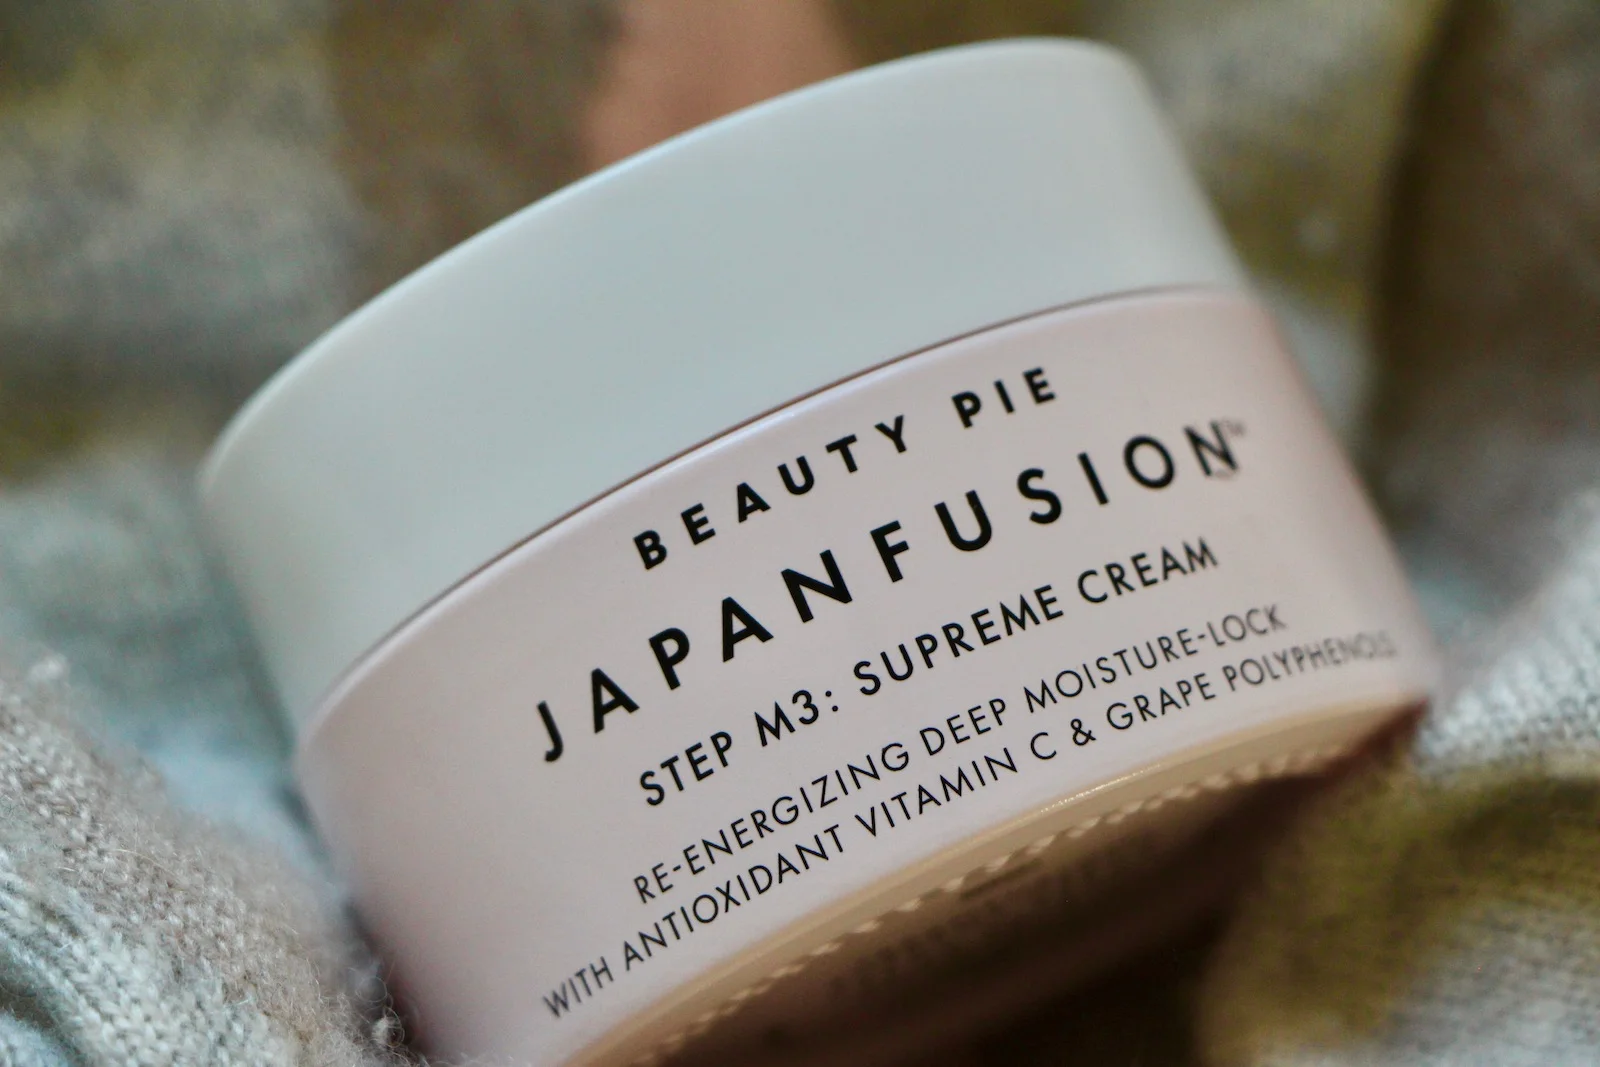 Japanfusion: A Truly Supreme Cream